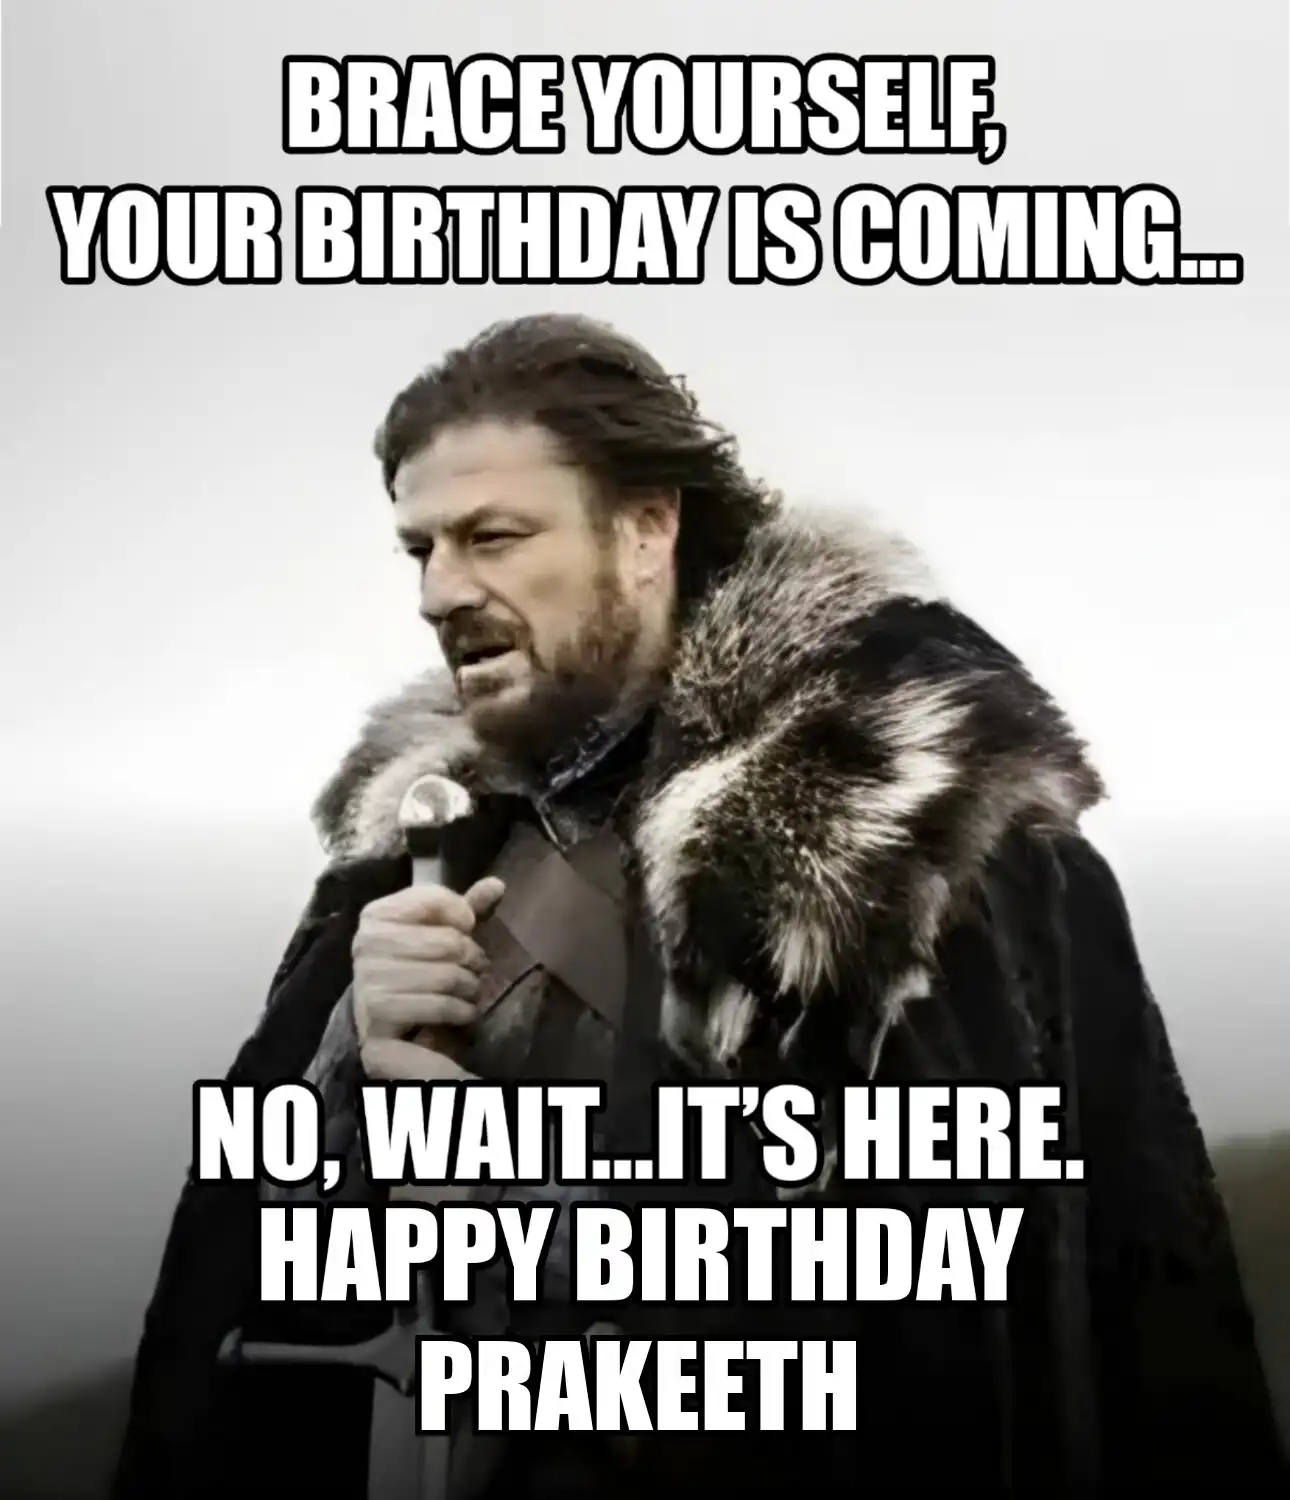 Happy Birthday Prakeeth Brace Yourself Your Birthday Is Coming Meme